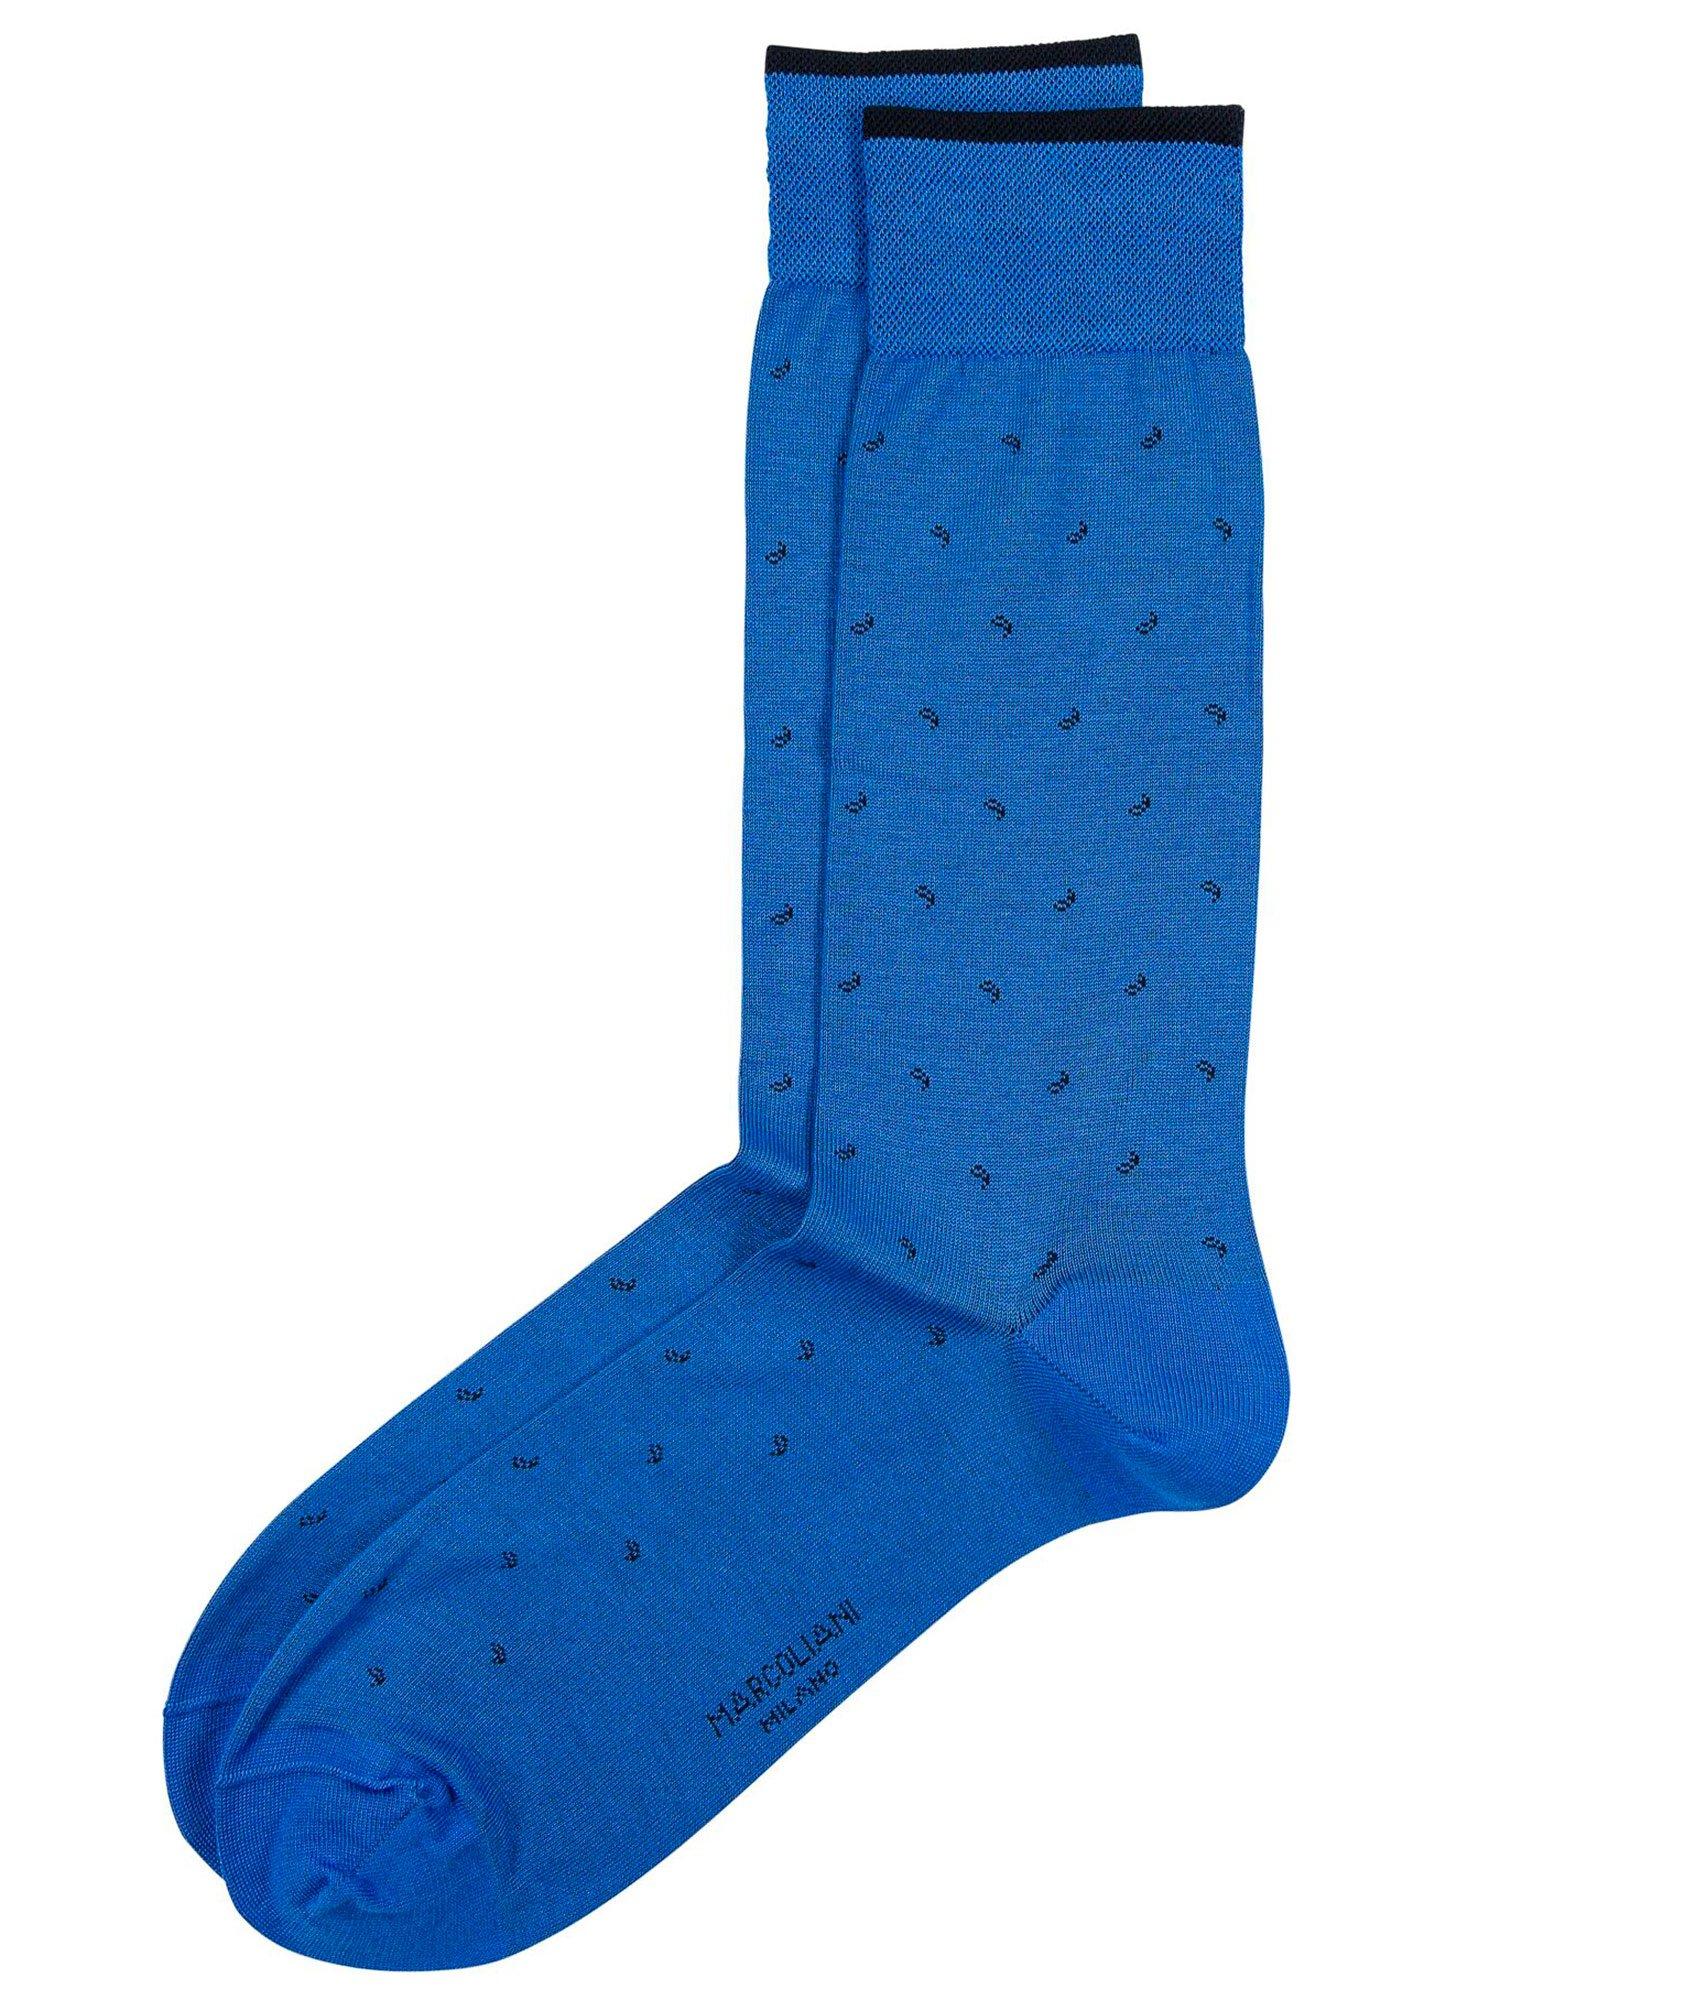 Paisley Cotton-Blend Socks image 0